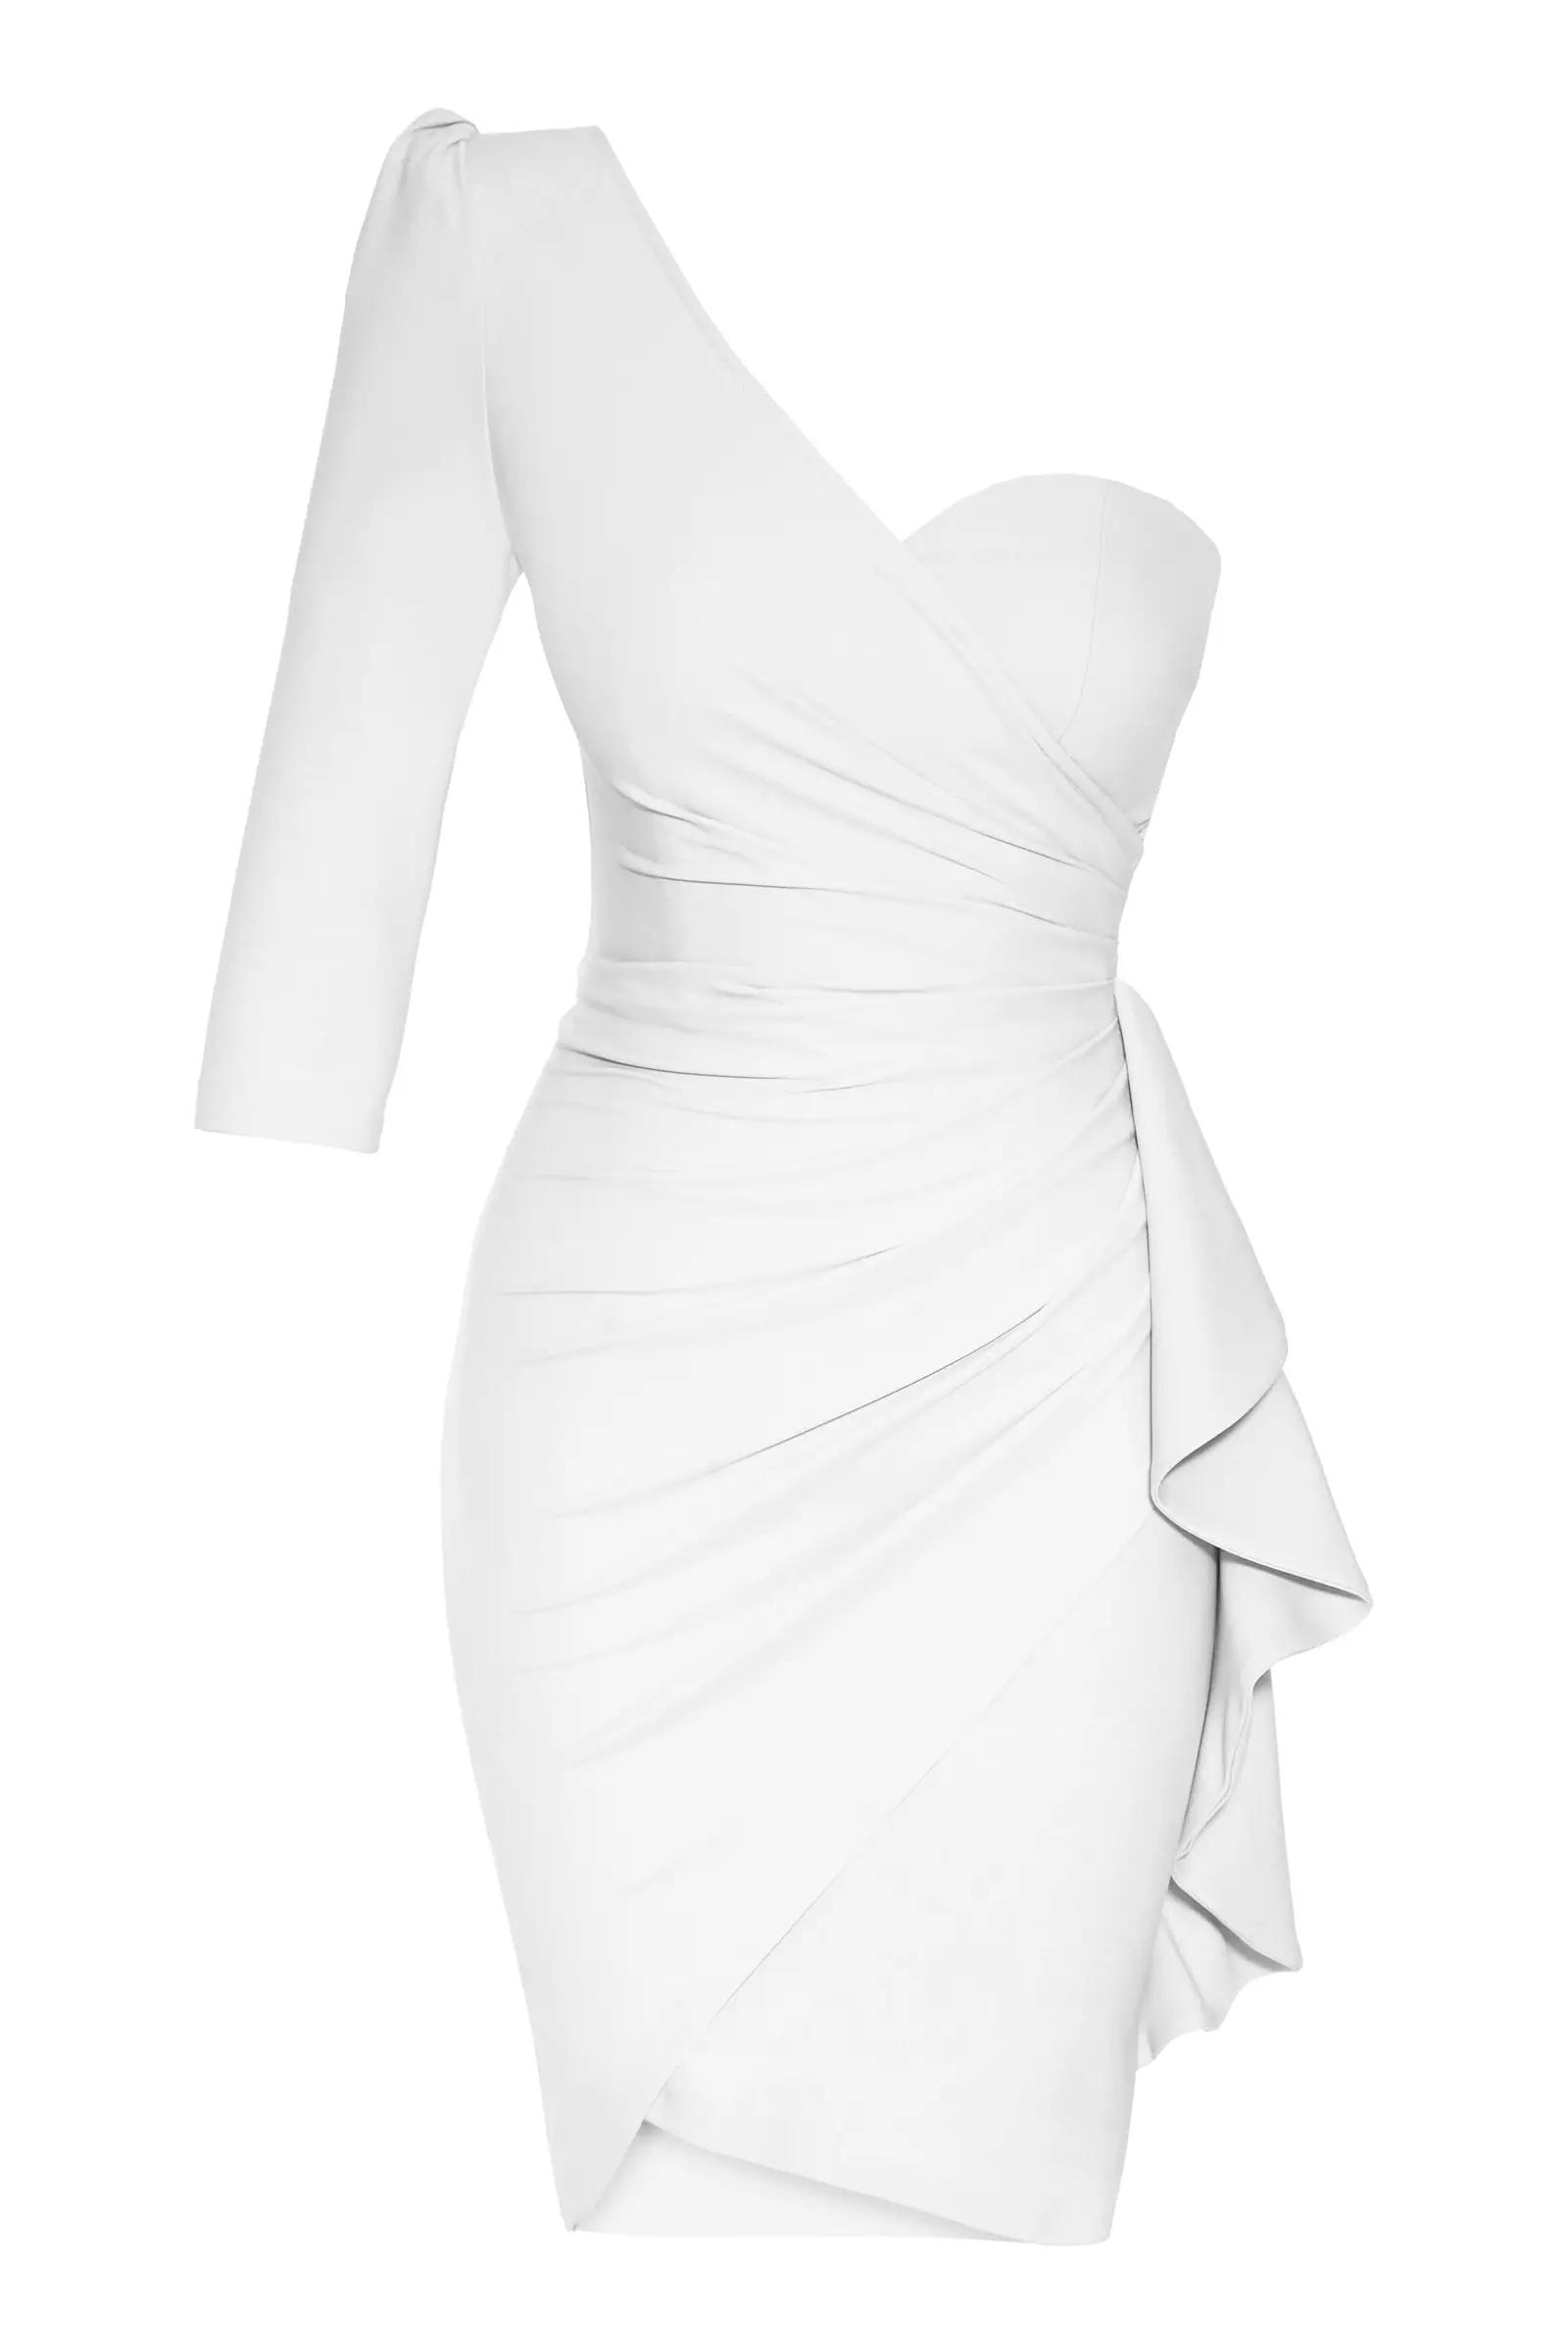 White crepe one arm mini dress